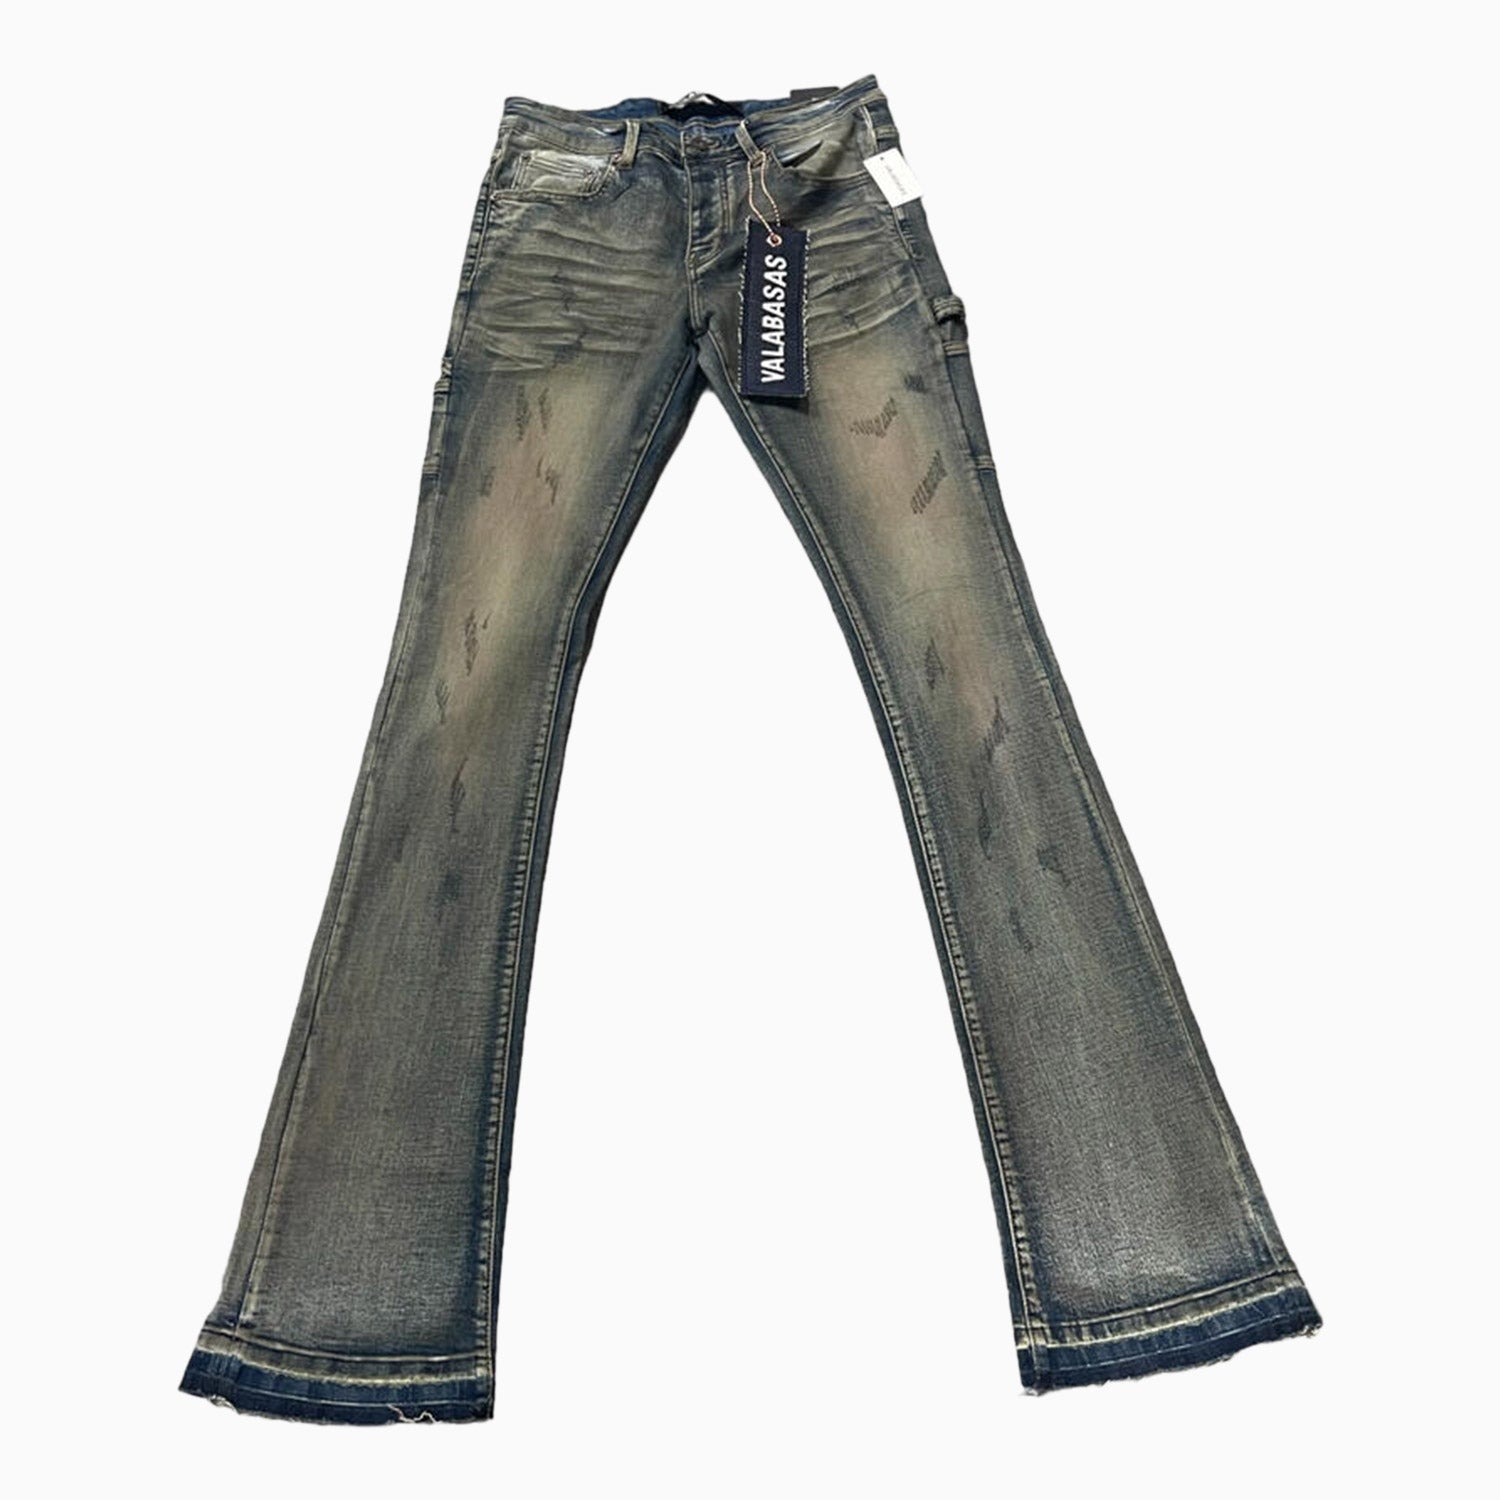 valabasas-mens-mr-extendo-denim-super-stacked-jeans-pant-vlbs2354-blusprc